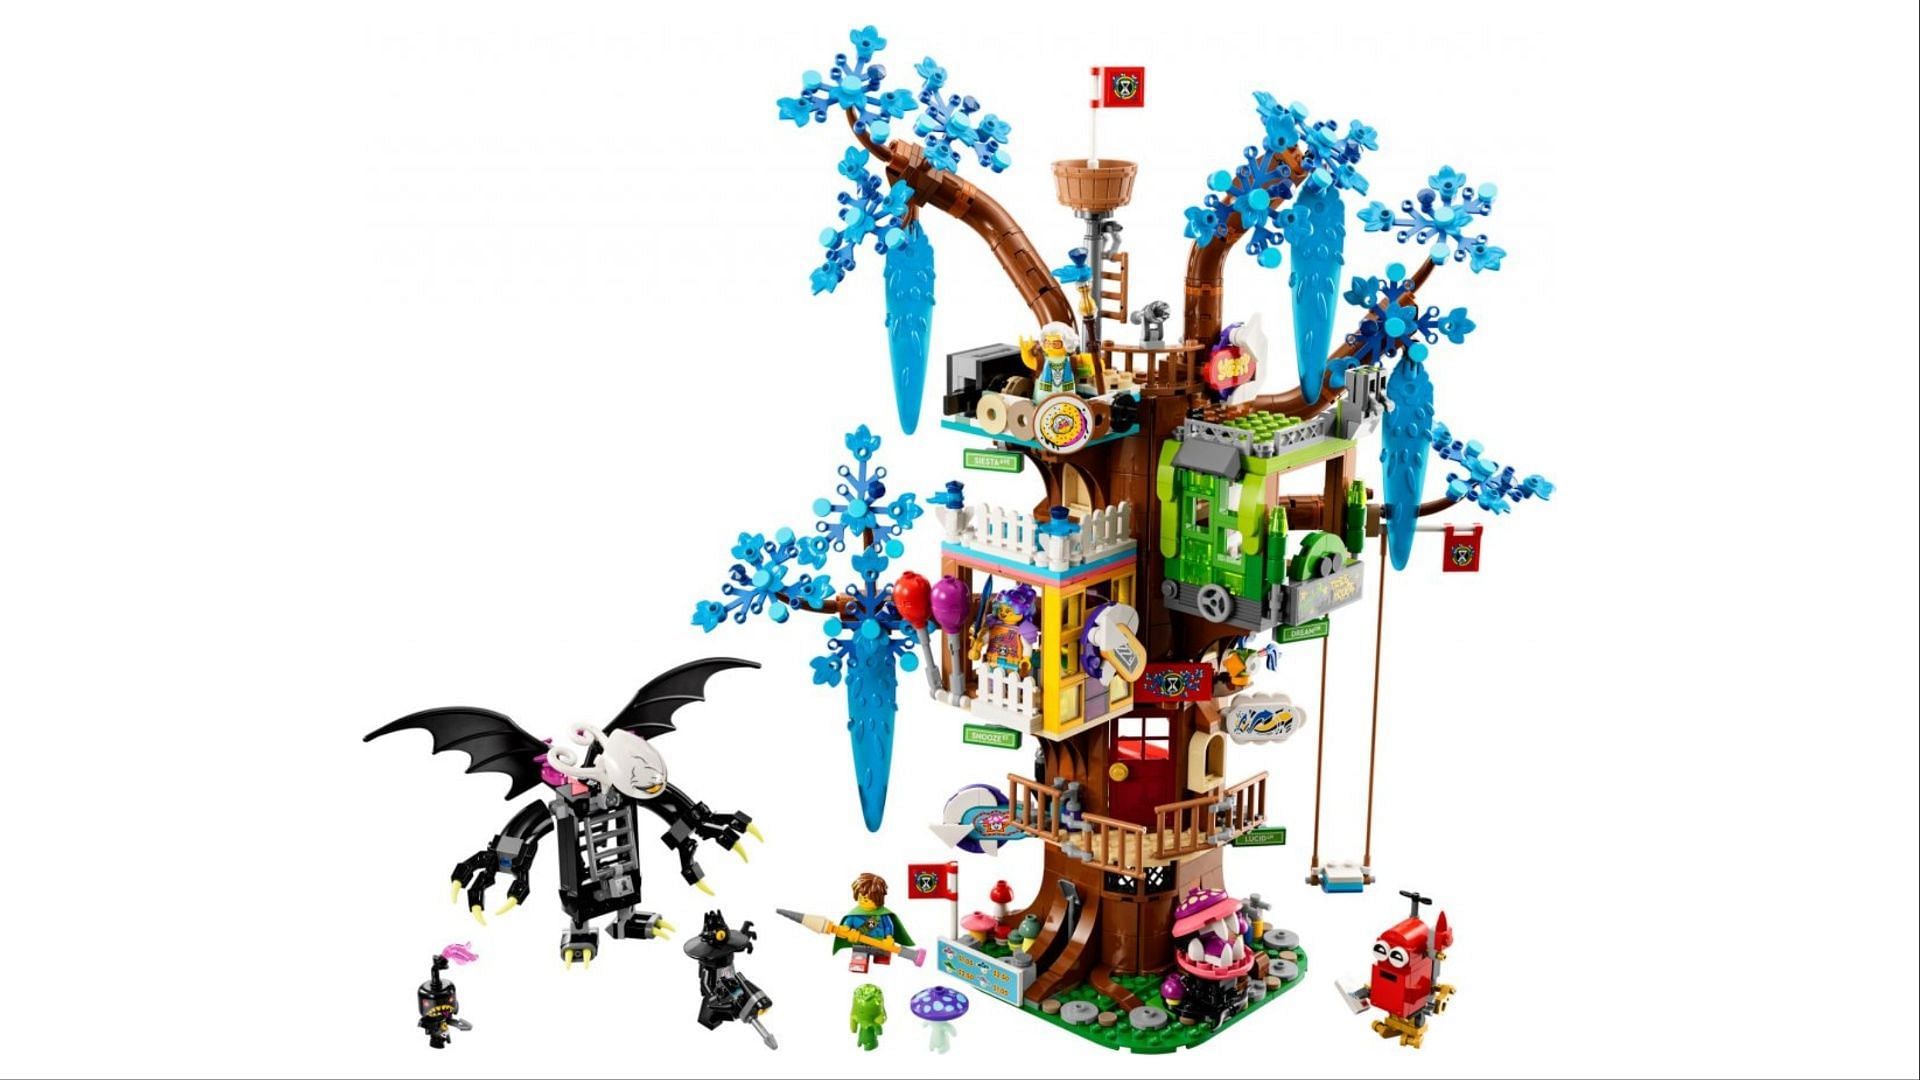 DREAMZzz Fantastical Tree House (Image via LEGO)